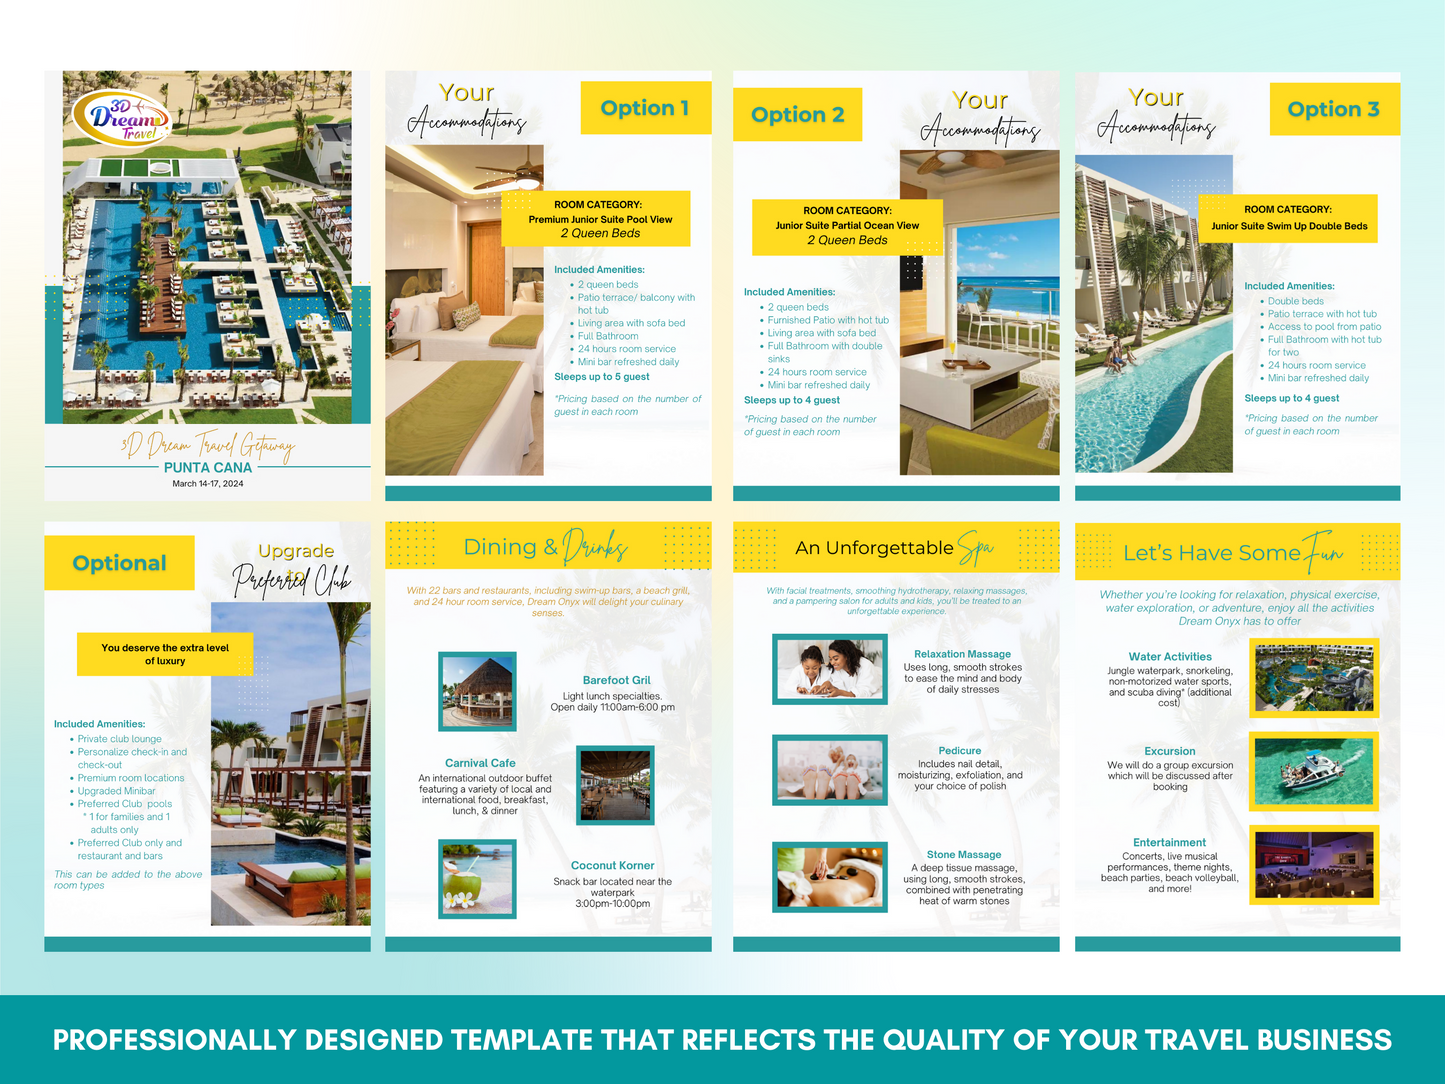 Travel Joy Group Booking Template - Design 1